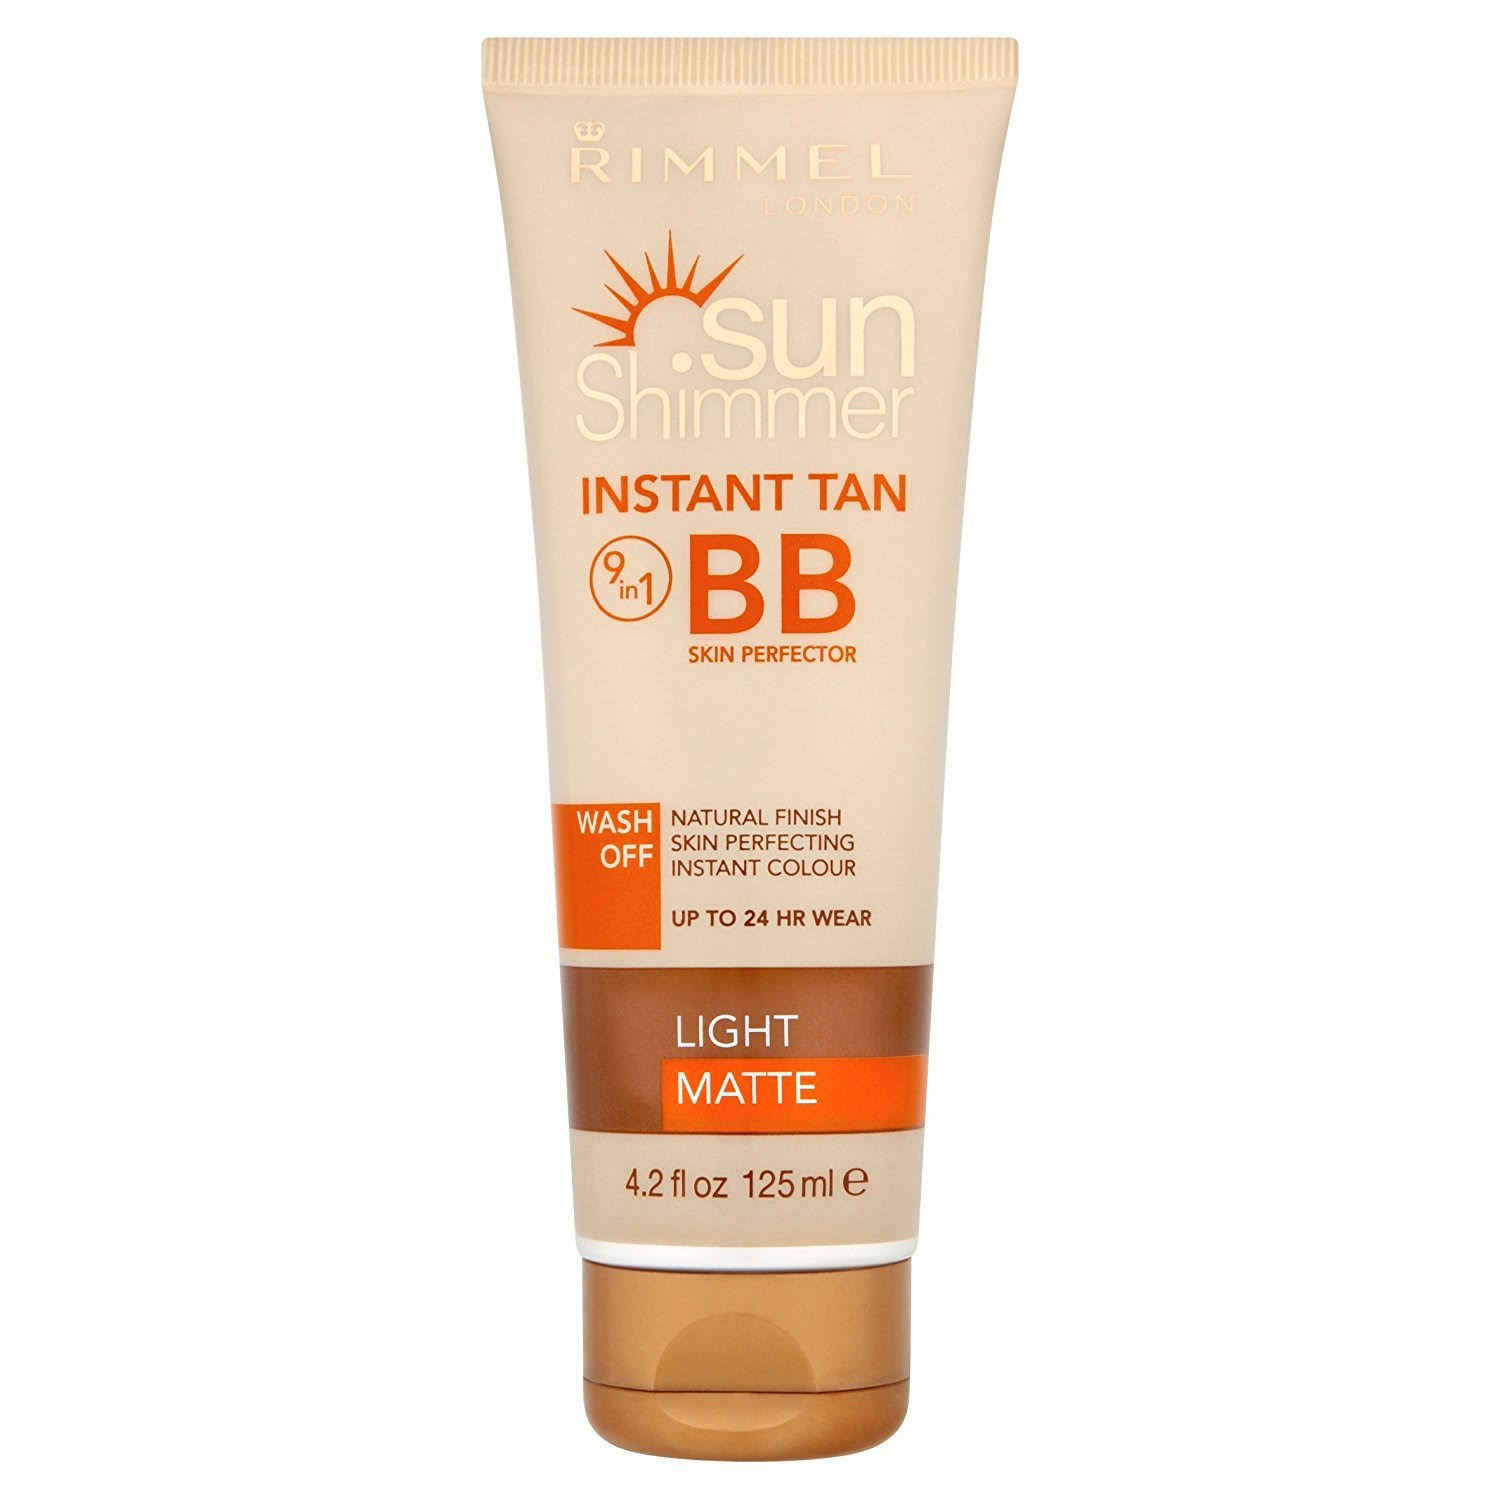 Rimmel Sun Shimmer Wash Off Instant Tan 9 in 1 Bb Skin Perfector - Light Matte, 125ml